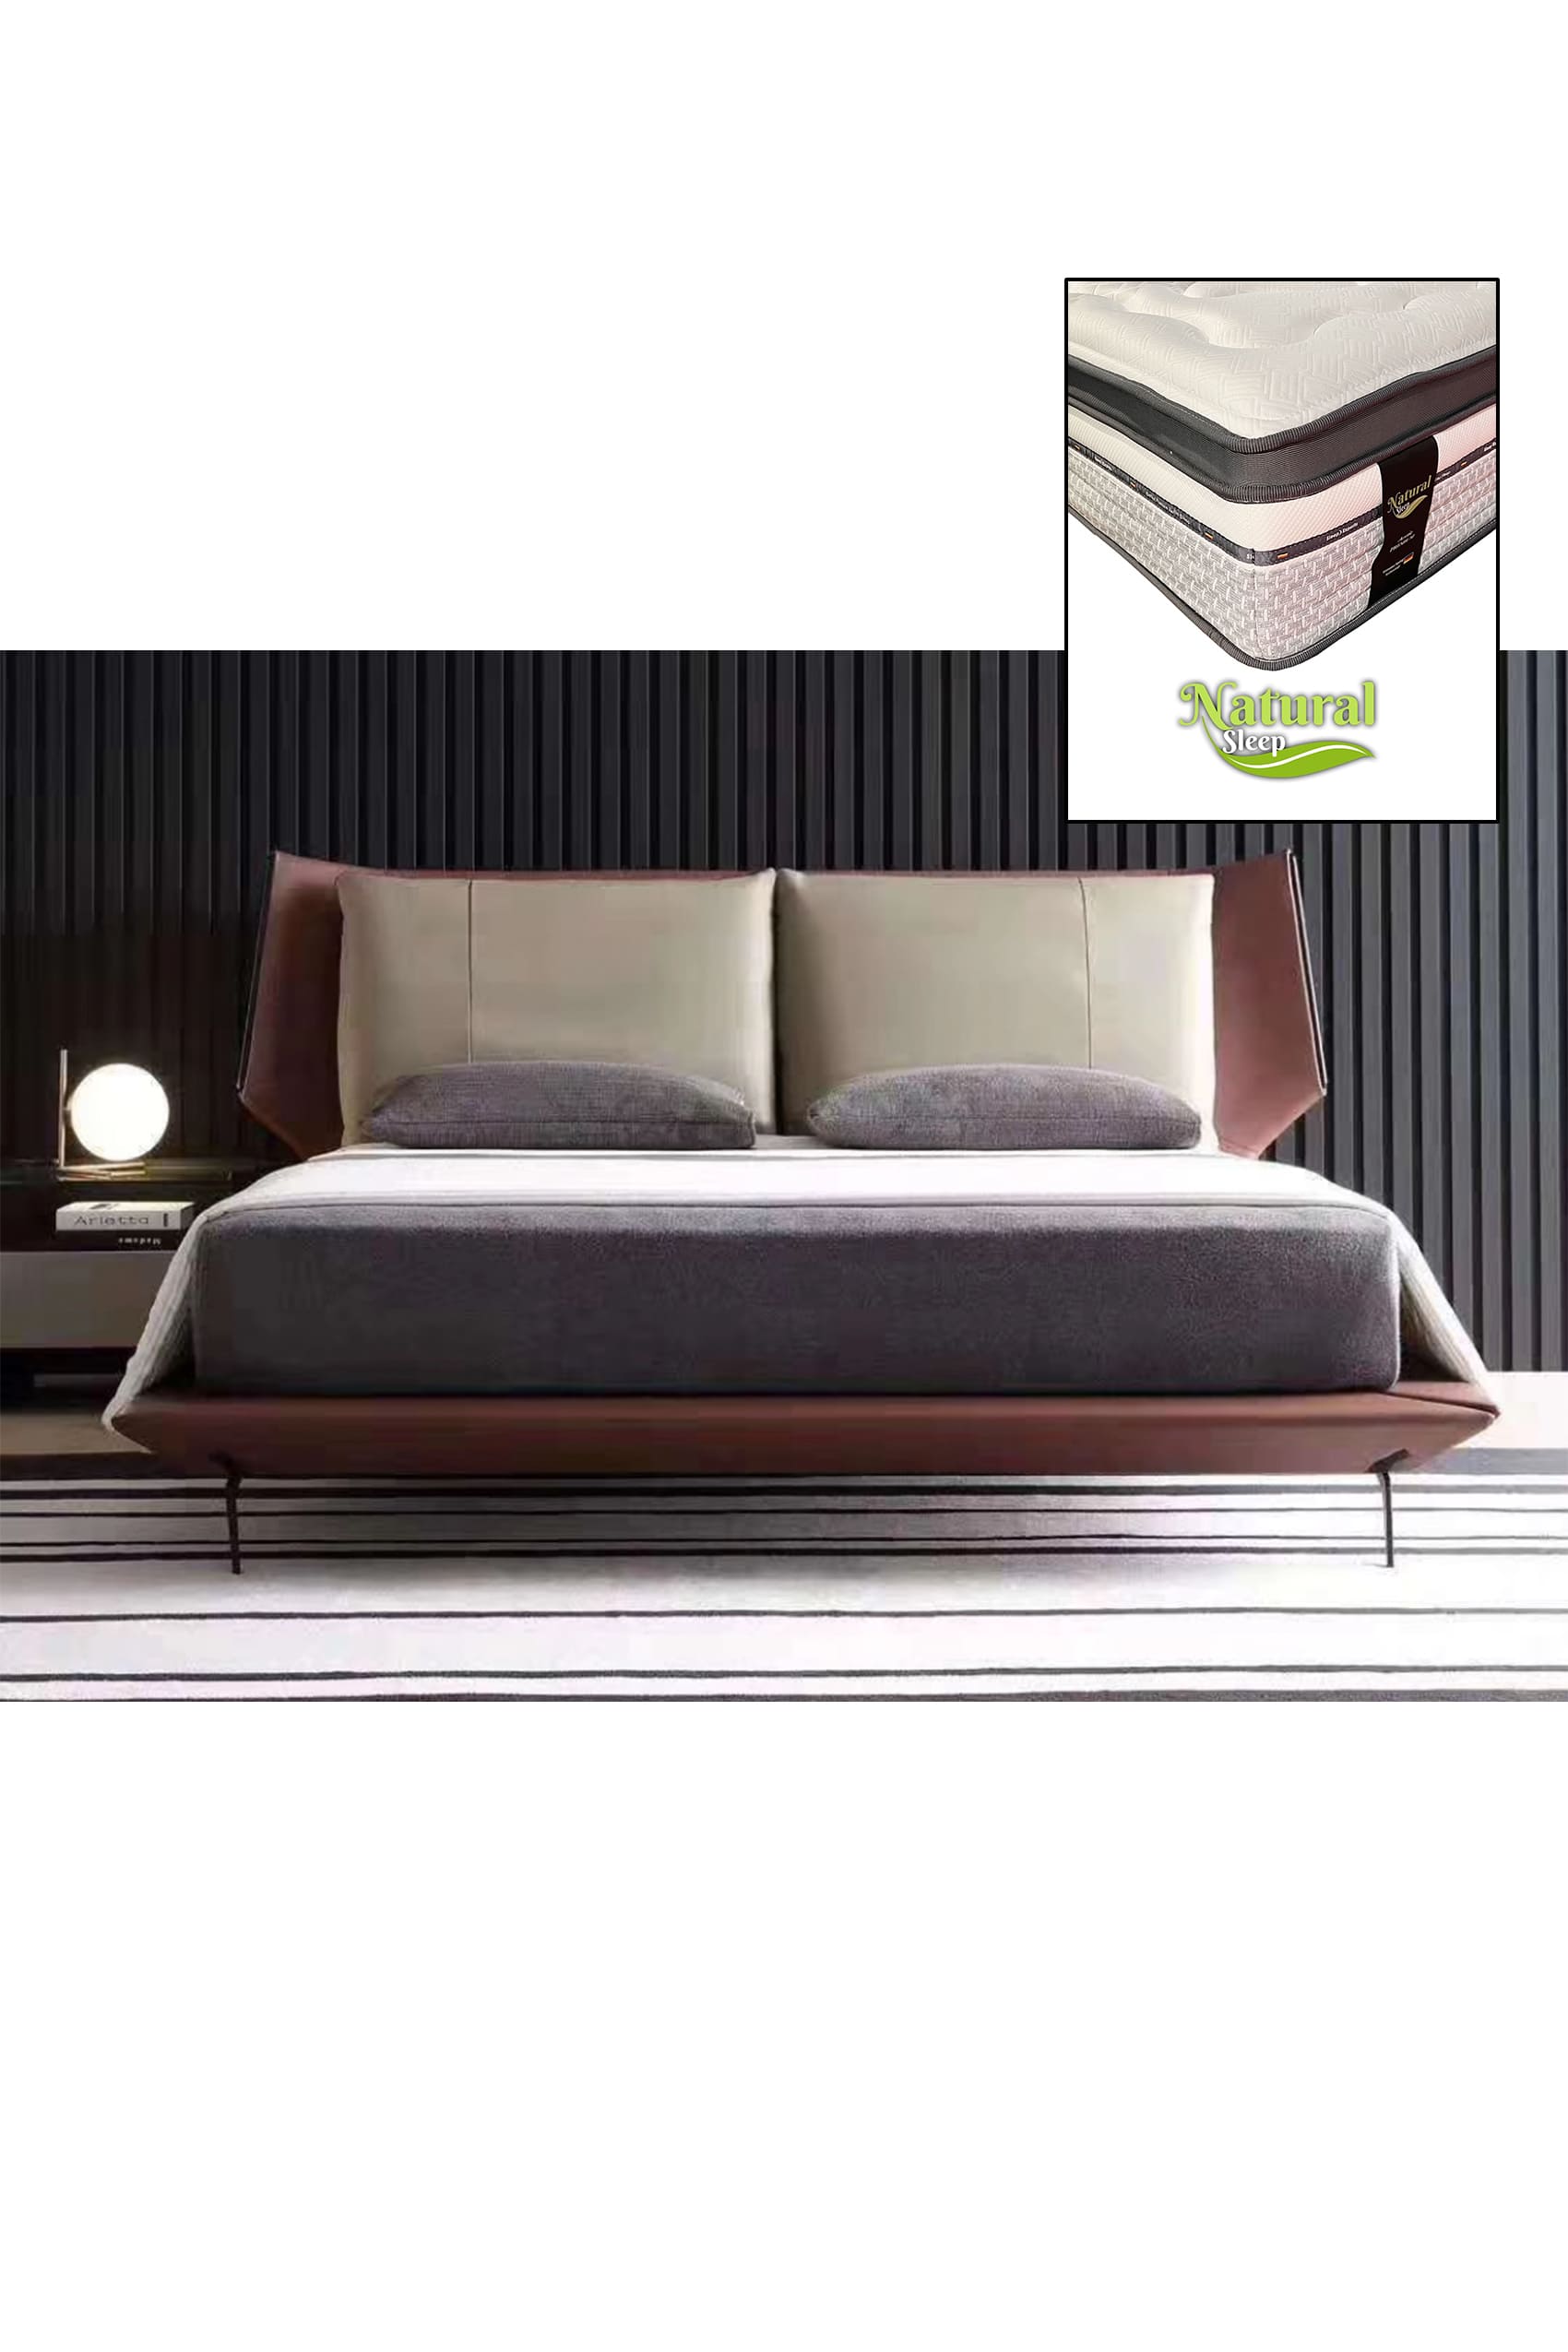 Oriana Designer Bed Frame + Natural Sleep (T5-Arctic)